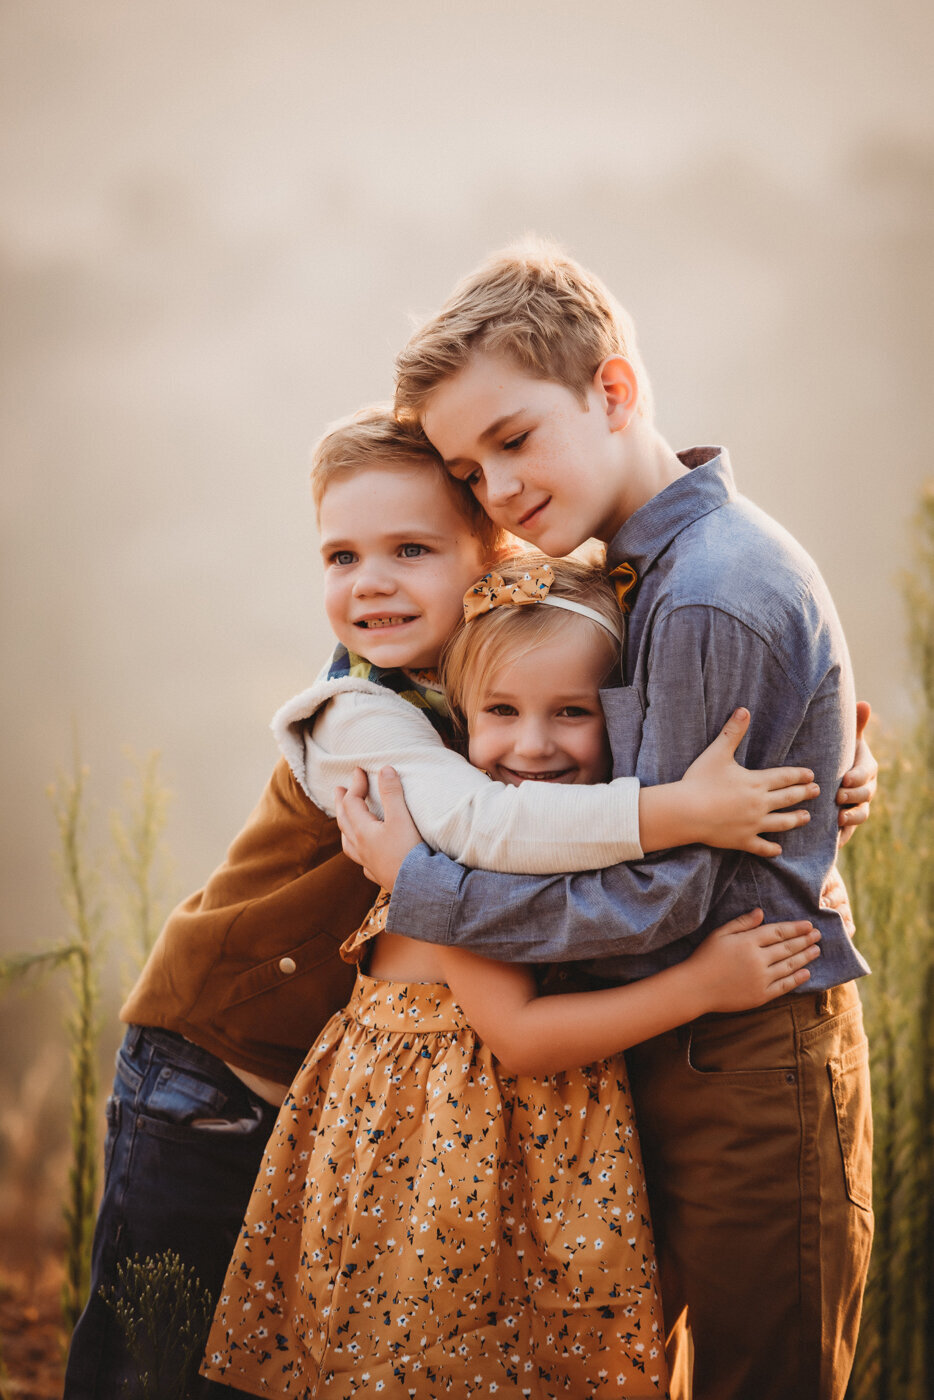 Three siblings share a hug